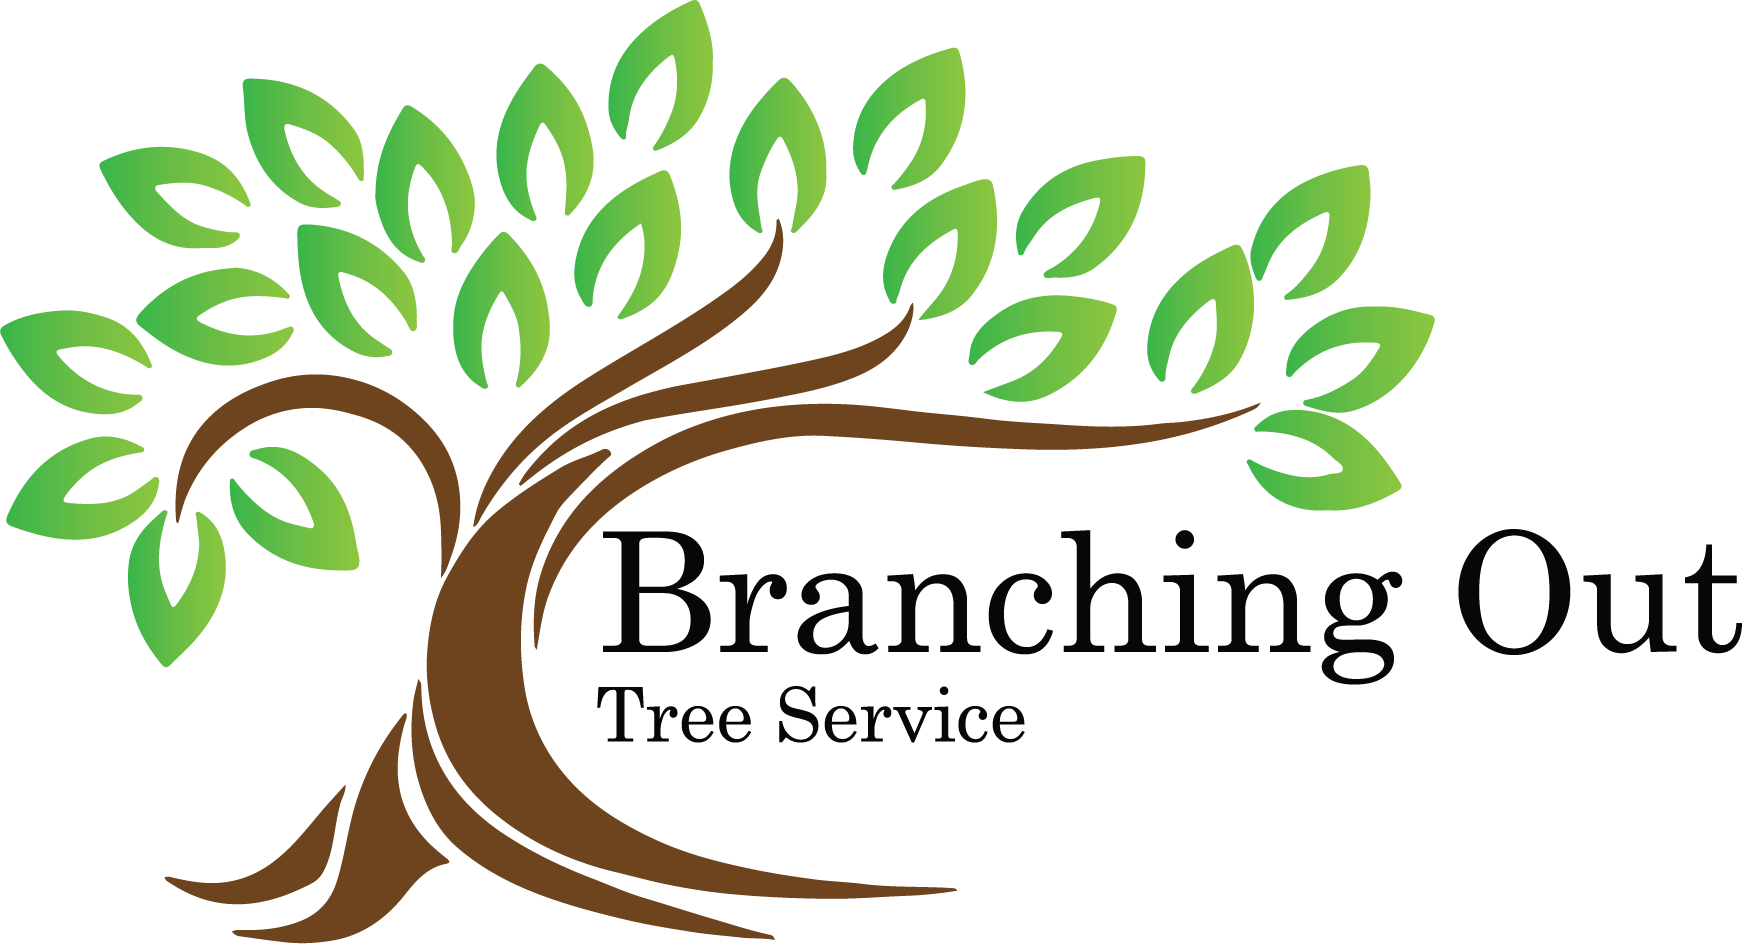 Tree Service Logo - Emergency Tree Care Services Conyers, Lithonia GA